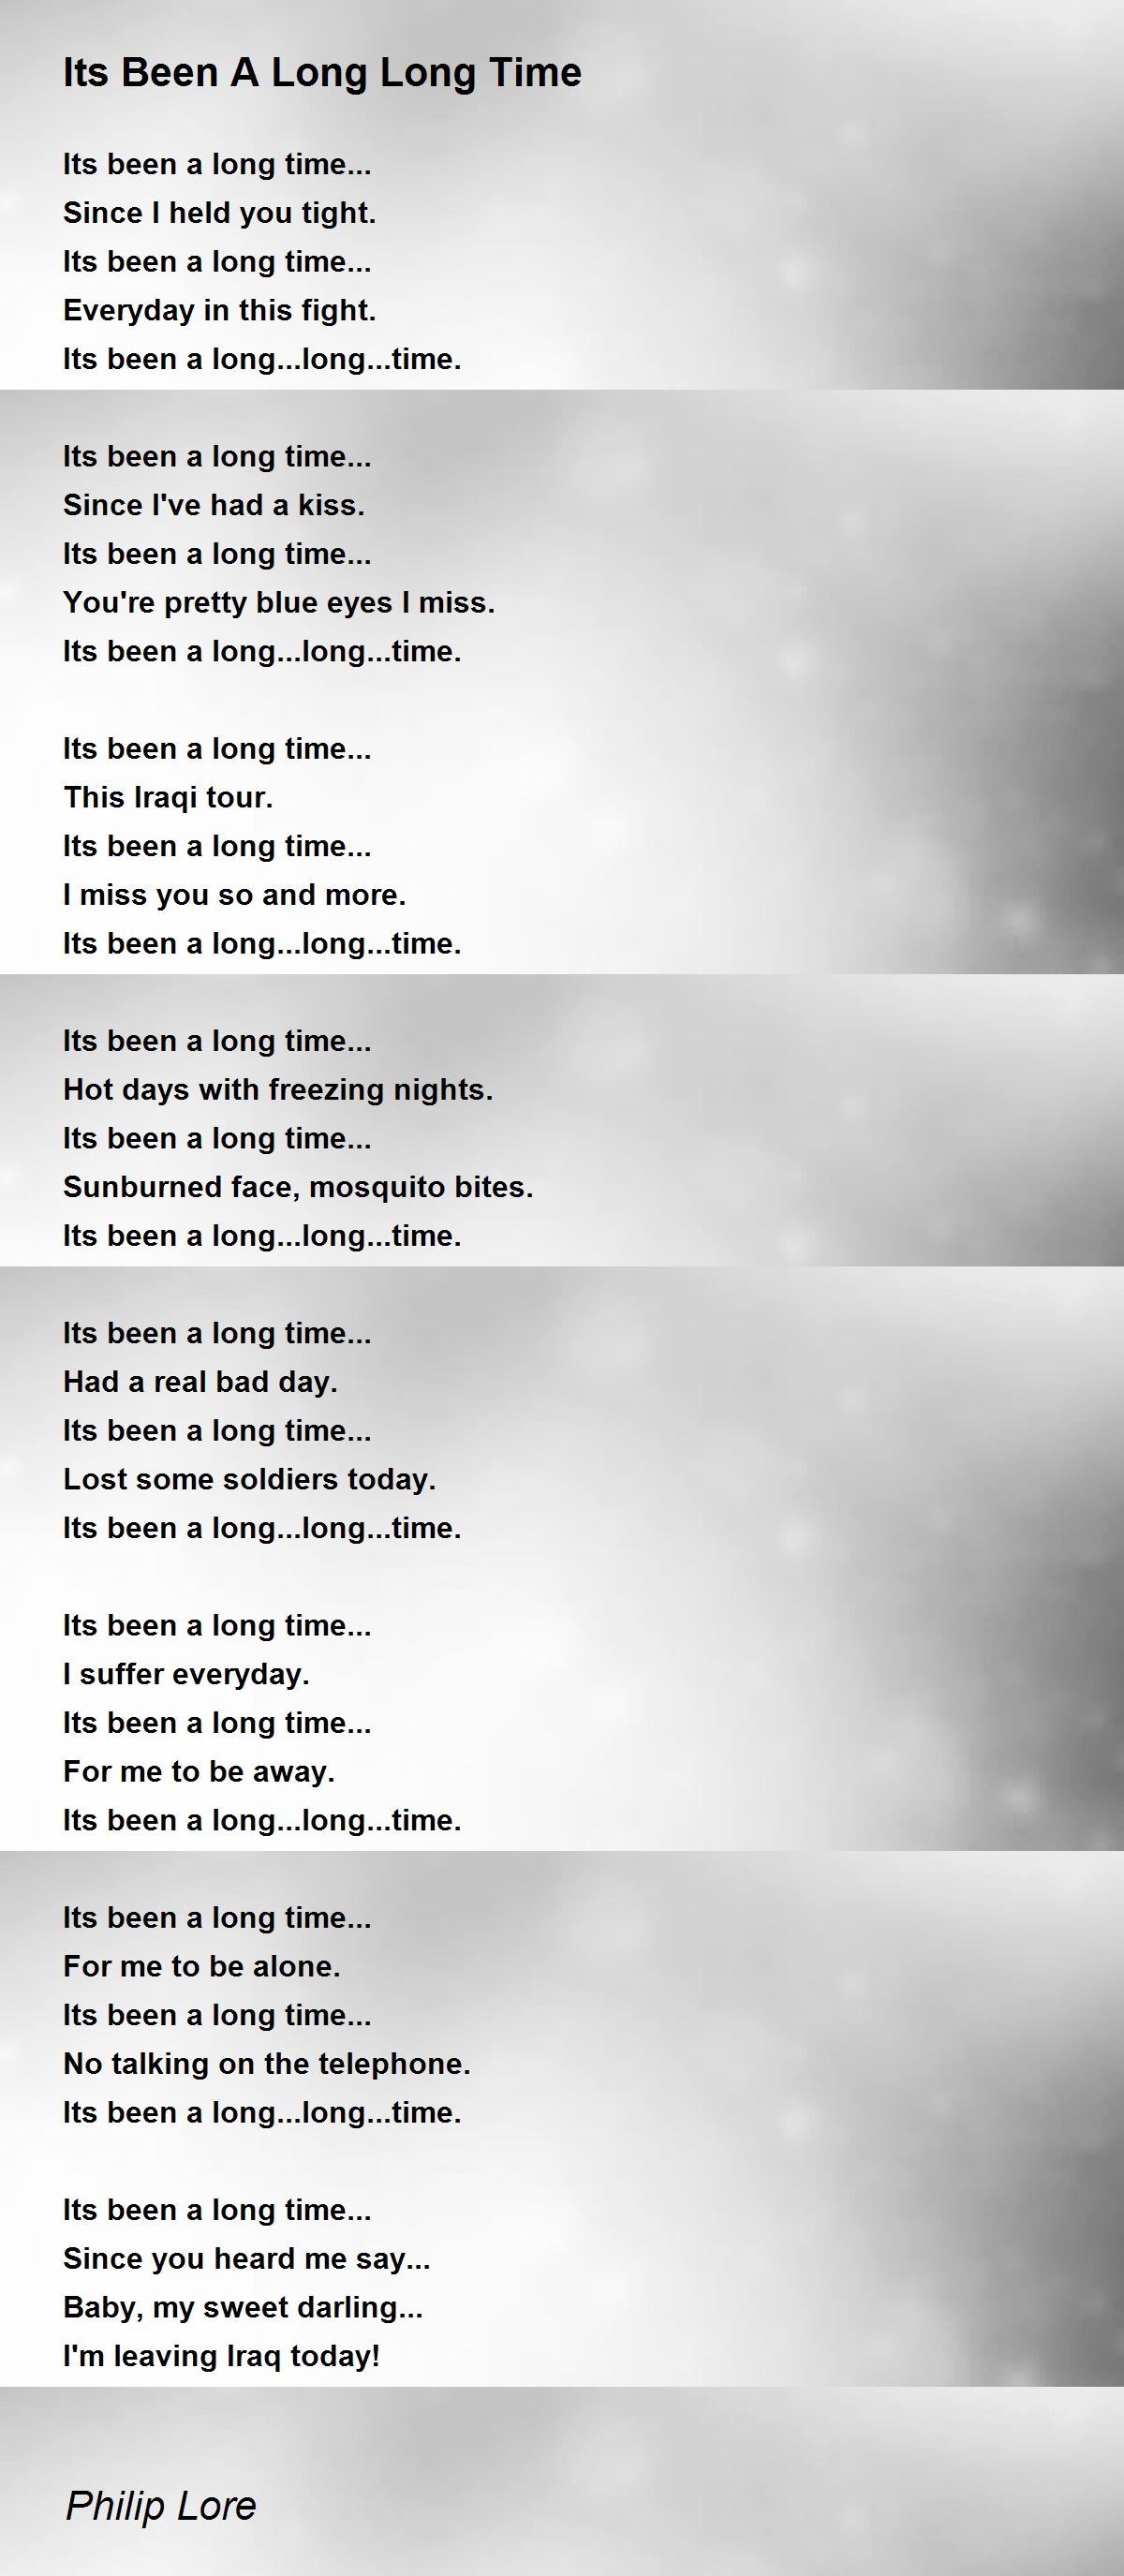 Its Been A Long Long Time - Its Been A Long Long Time Poem by Philip Lore